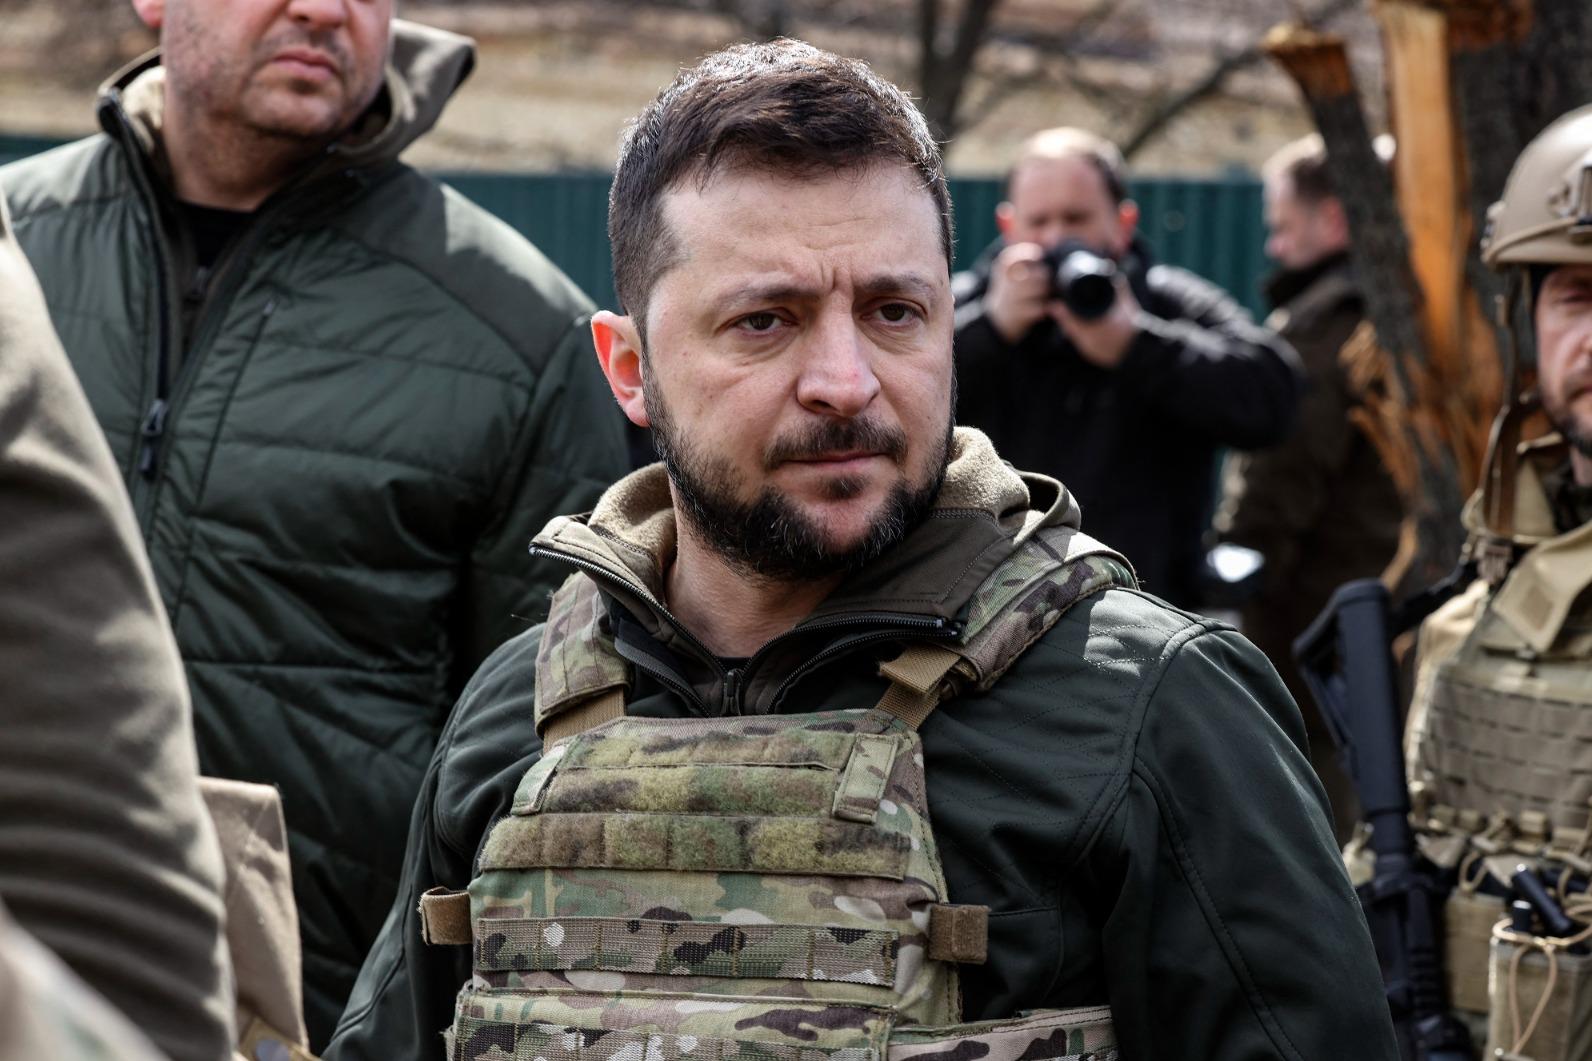 Zelensky: "Mariupol sarà liberata e la bandiera ucraina tornerà"